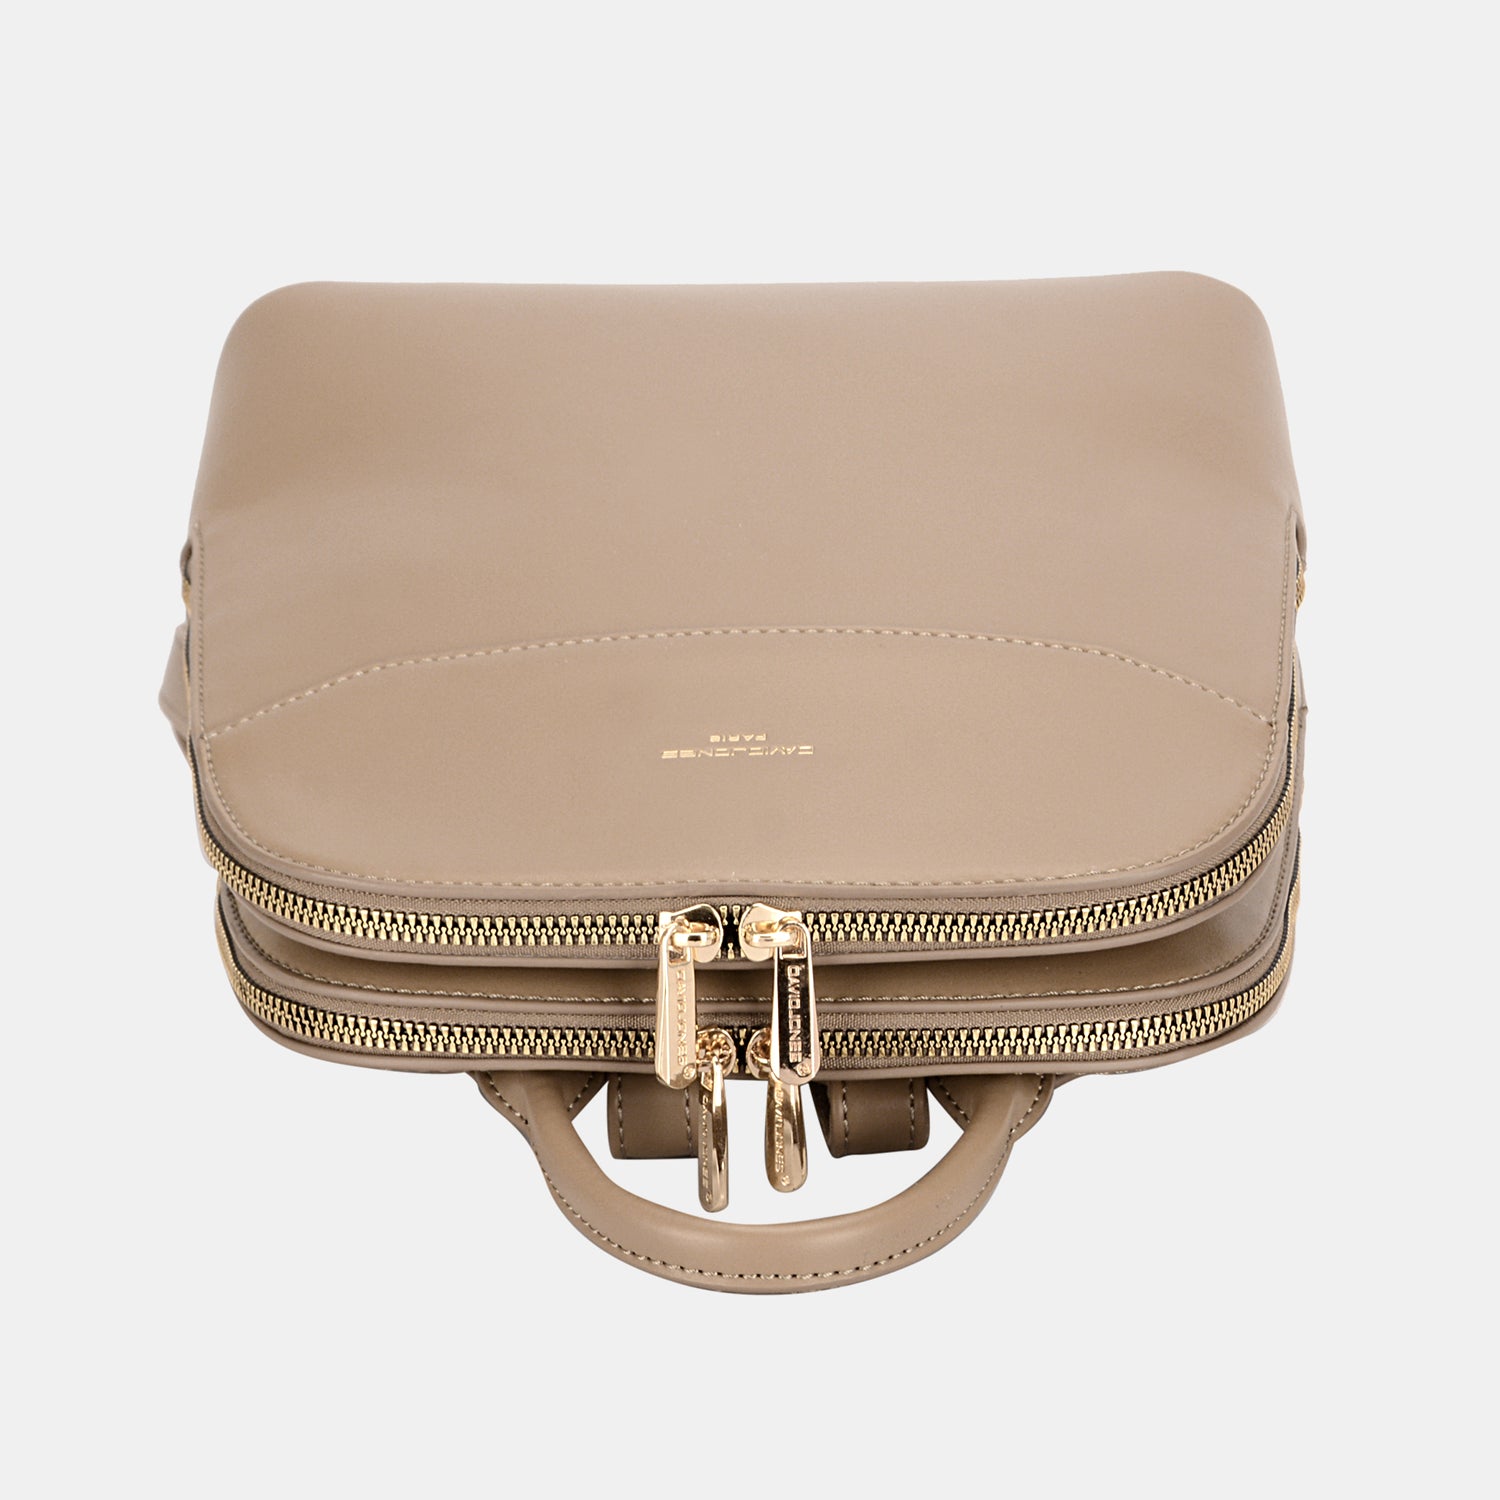 Light Gray David Jones PU Leather Adjustable Straps Backpack Bag Sentient Beauty Fashions Apaparel & Accessories